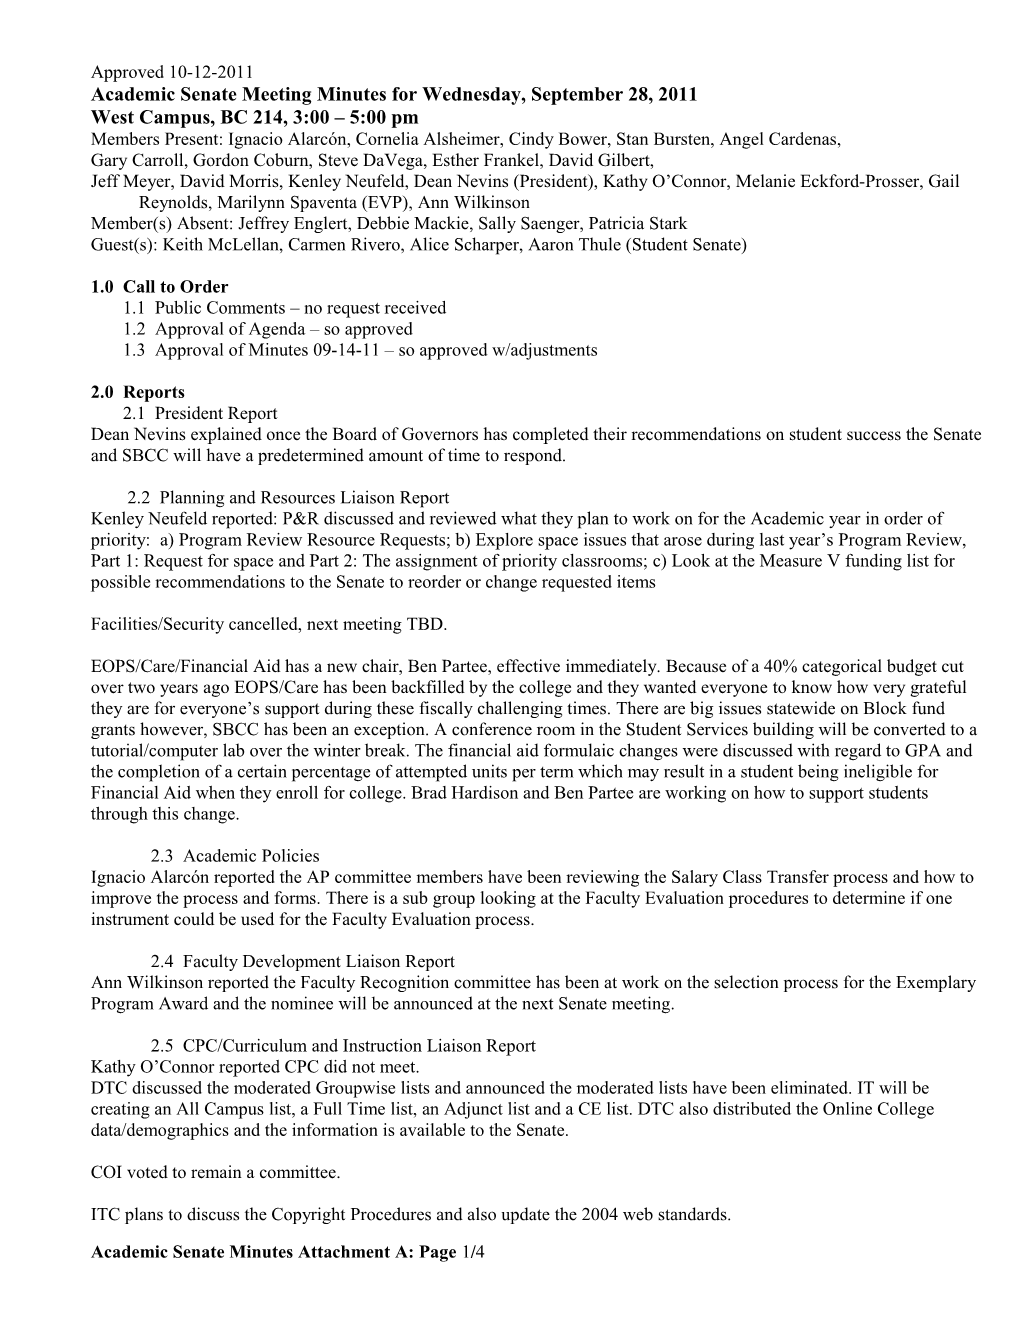 Academic Senate Meeting Minutes for Wednesday, September 28, 2011